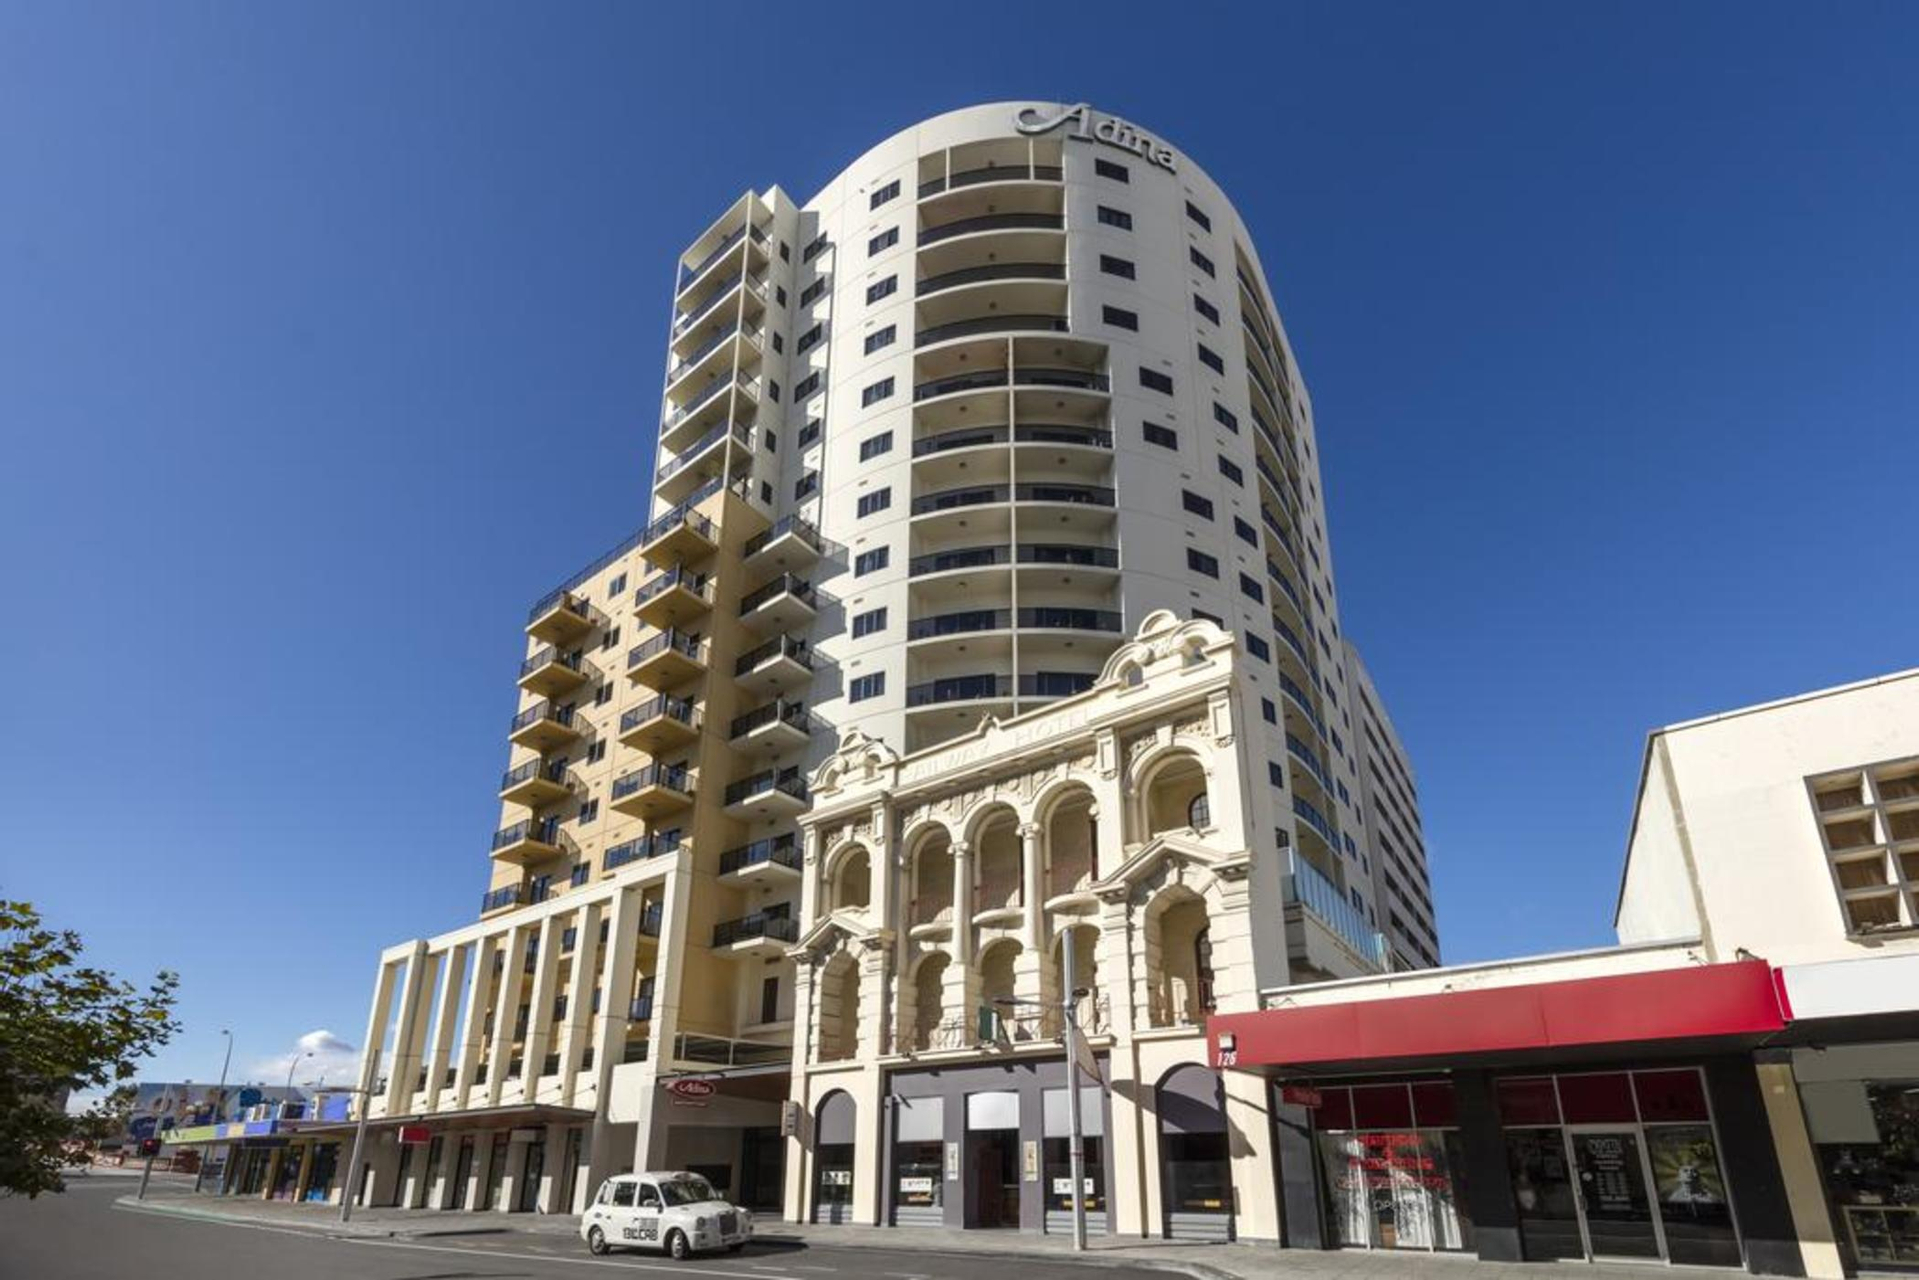 Adina Apartment Hotel Perth Barrack Plaza, Perth